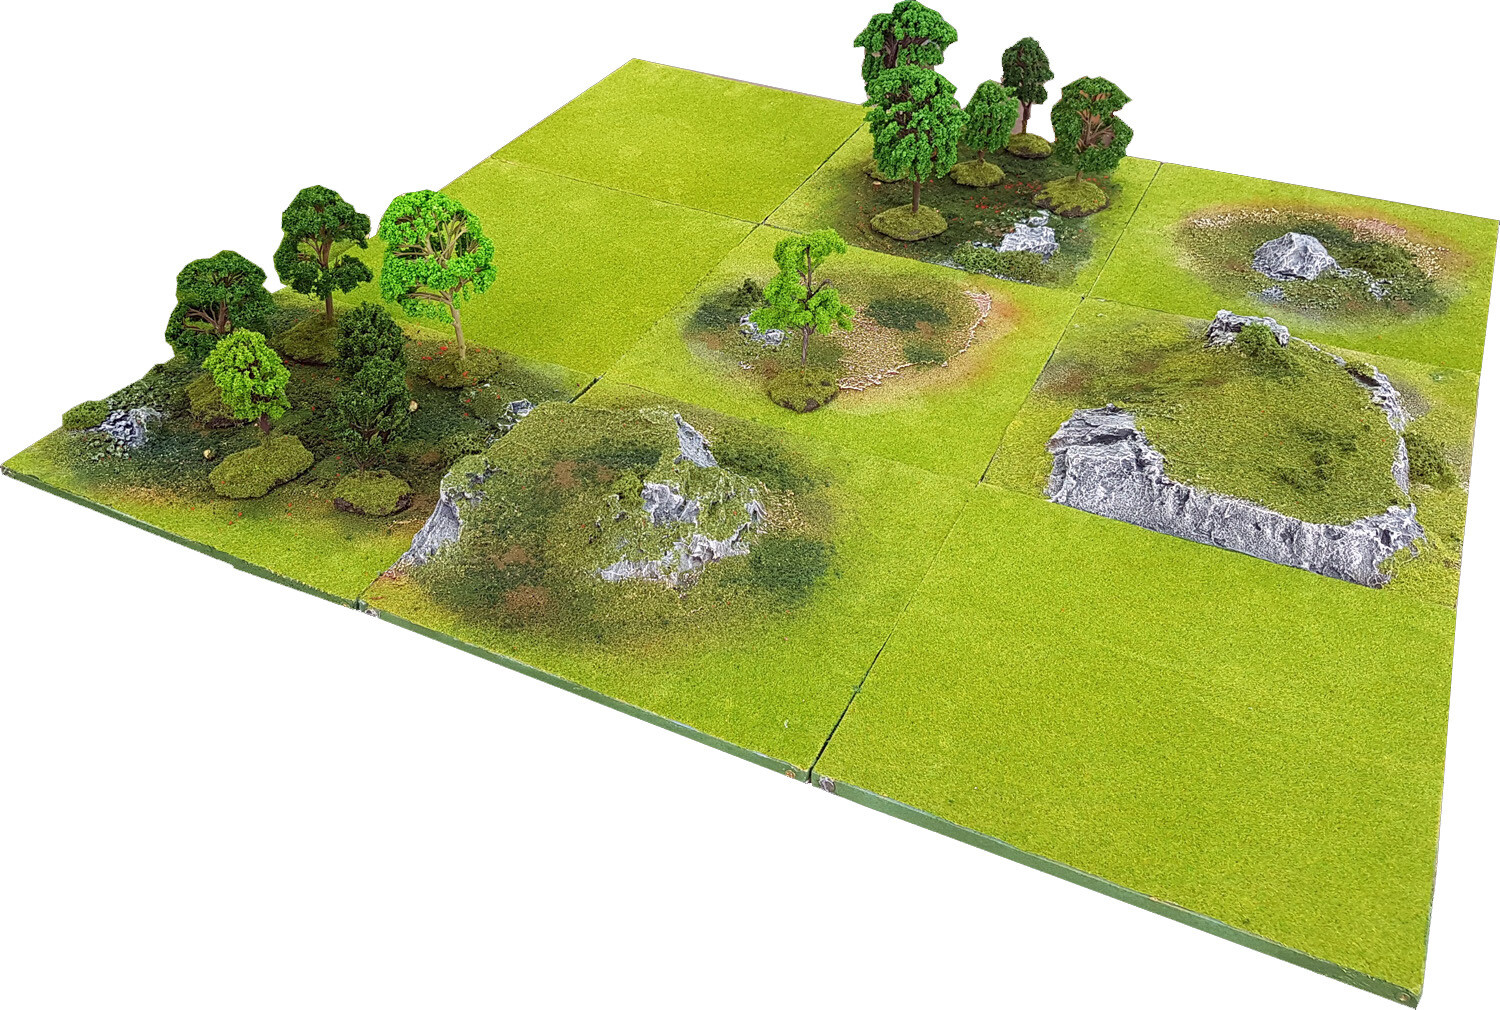 WARGAME Terrain Scenery Snow lands Modular Gaming Board 3/'x3/' Set with terrain